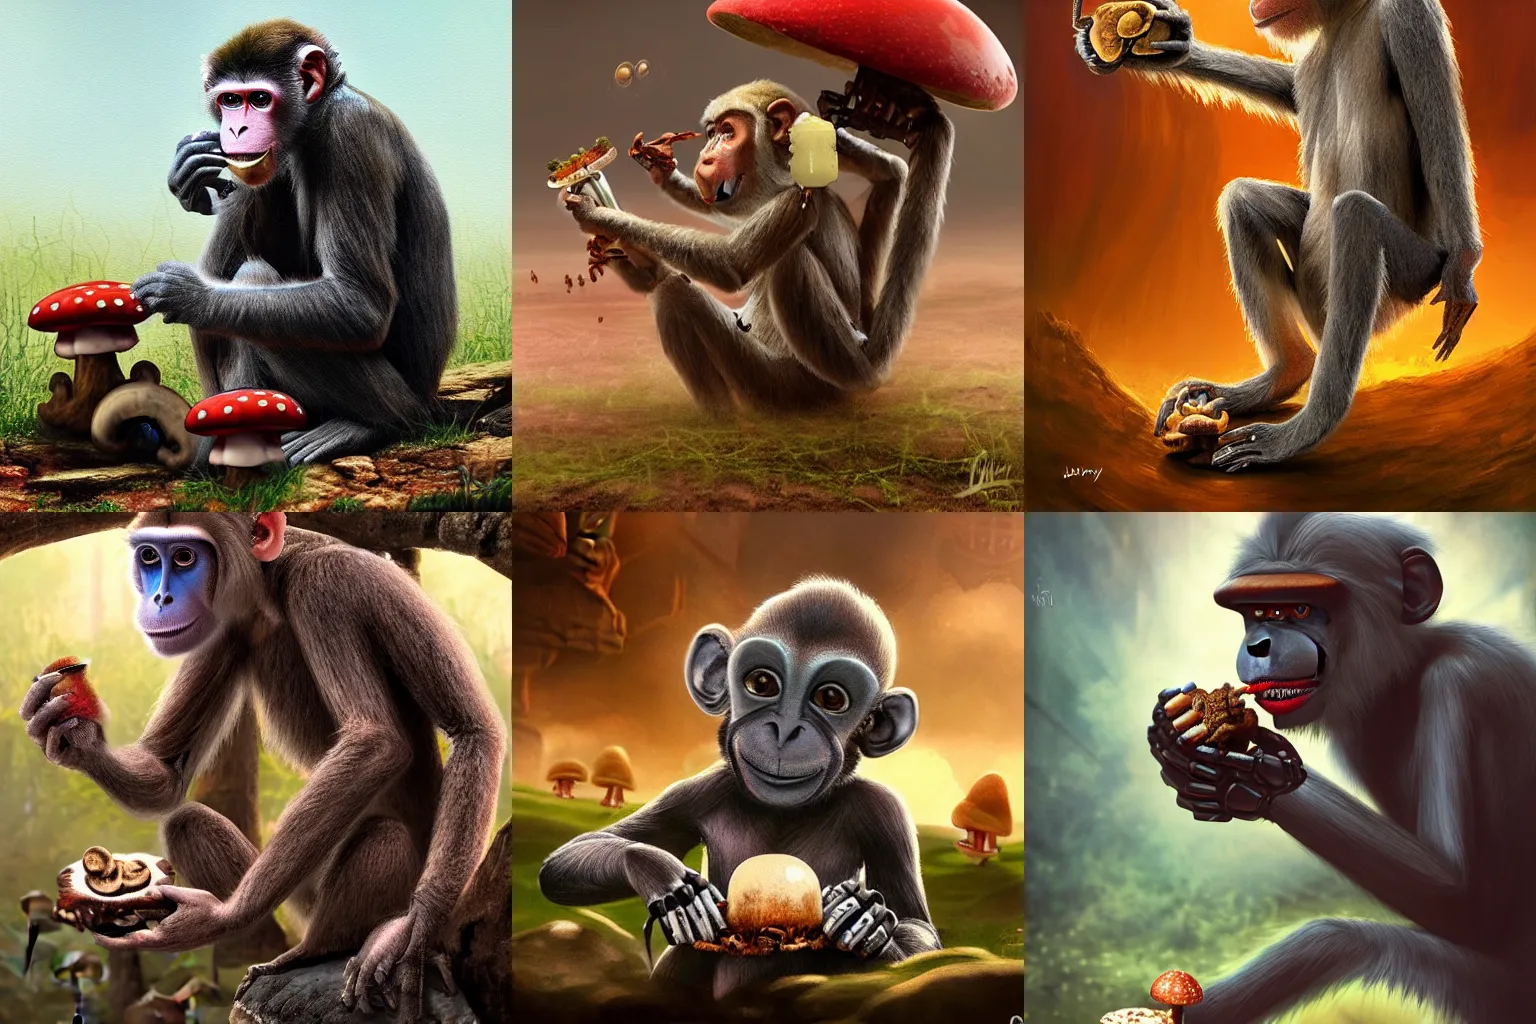 Prompt: robot robot monkey monkey eating eating mushroom mushroom, digital painting, concept art, 4k, realistic, realistic face, stunning, beautiful, detailed render, masterpiece, dramatic, film, cinematic